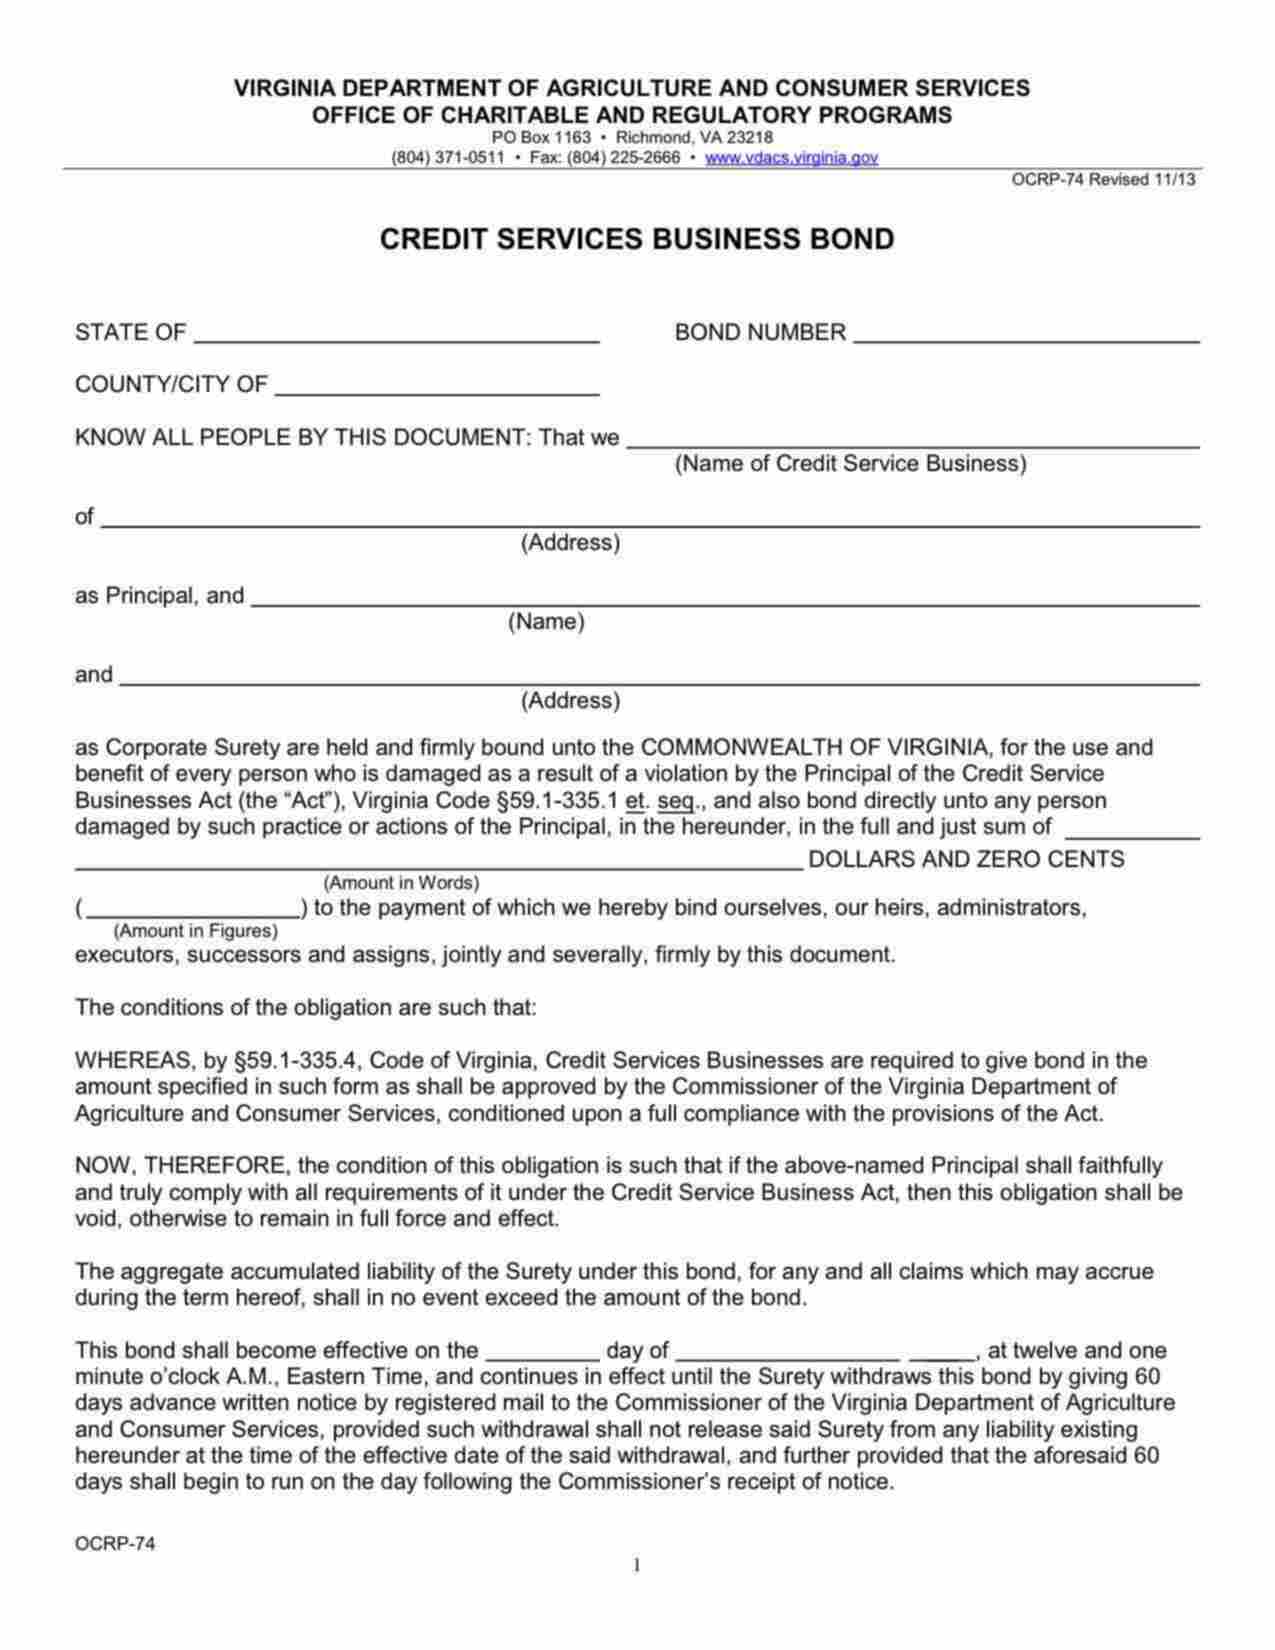 Virginia Credit Services Business Bond Form